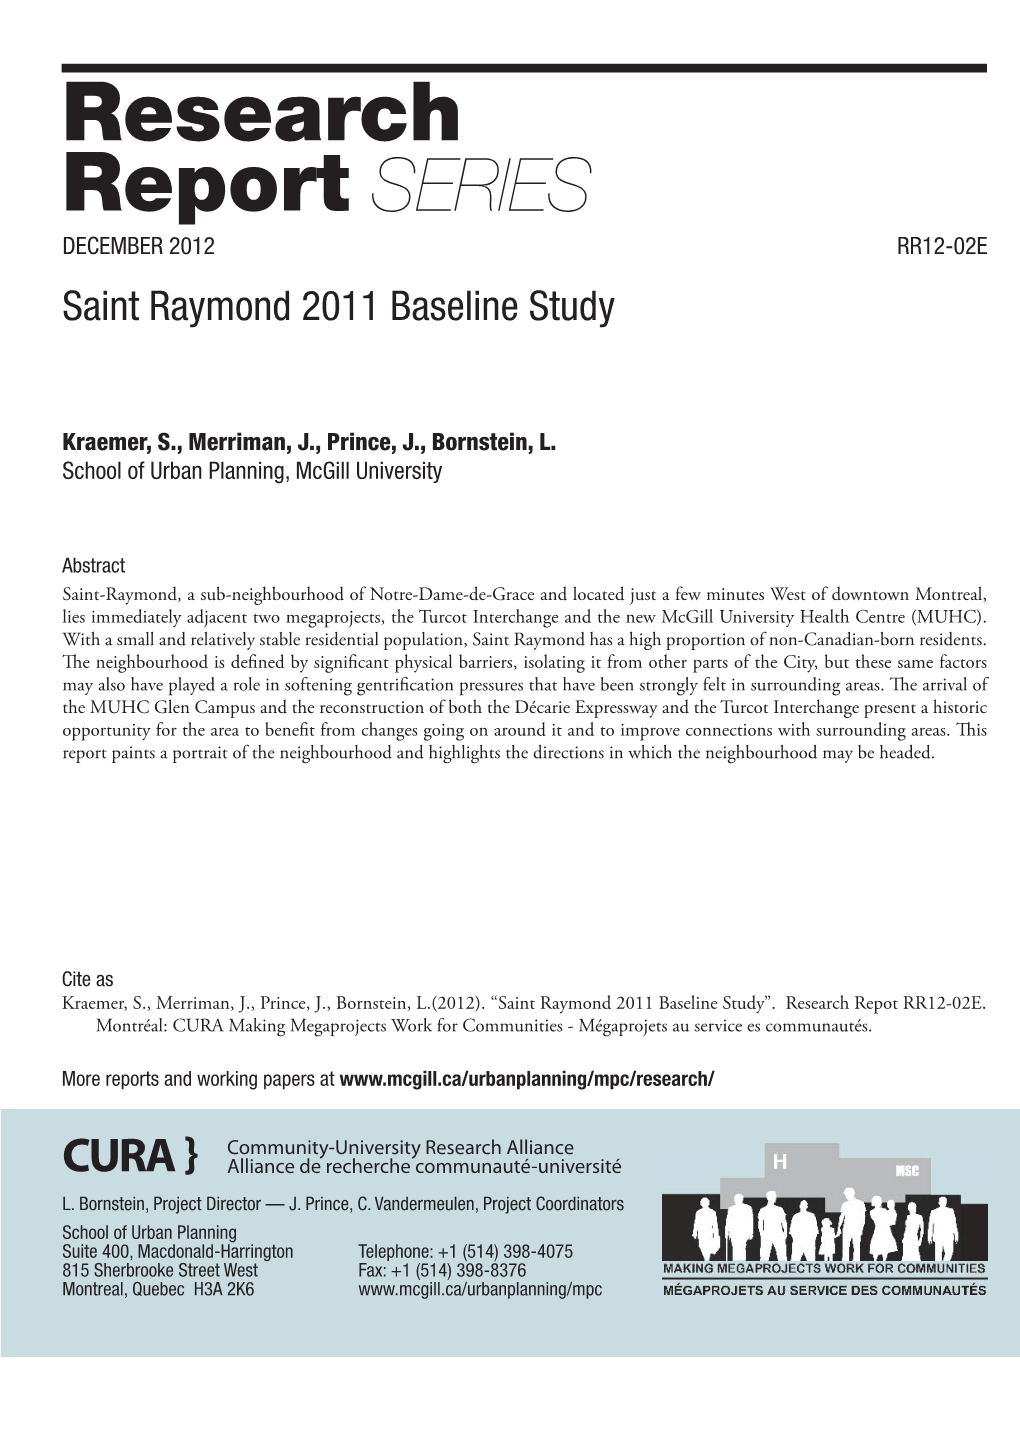 Saint Raymond 2011 Baseline Report